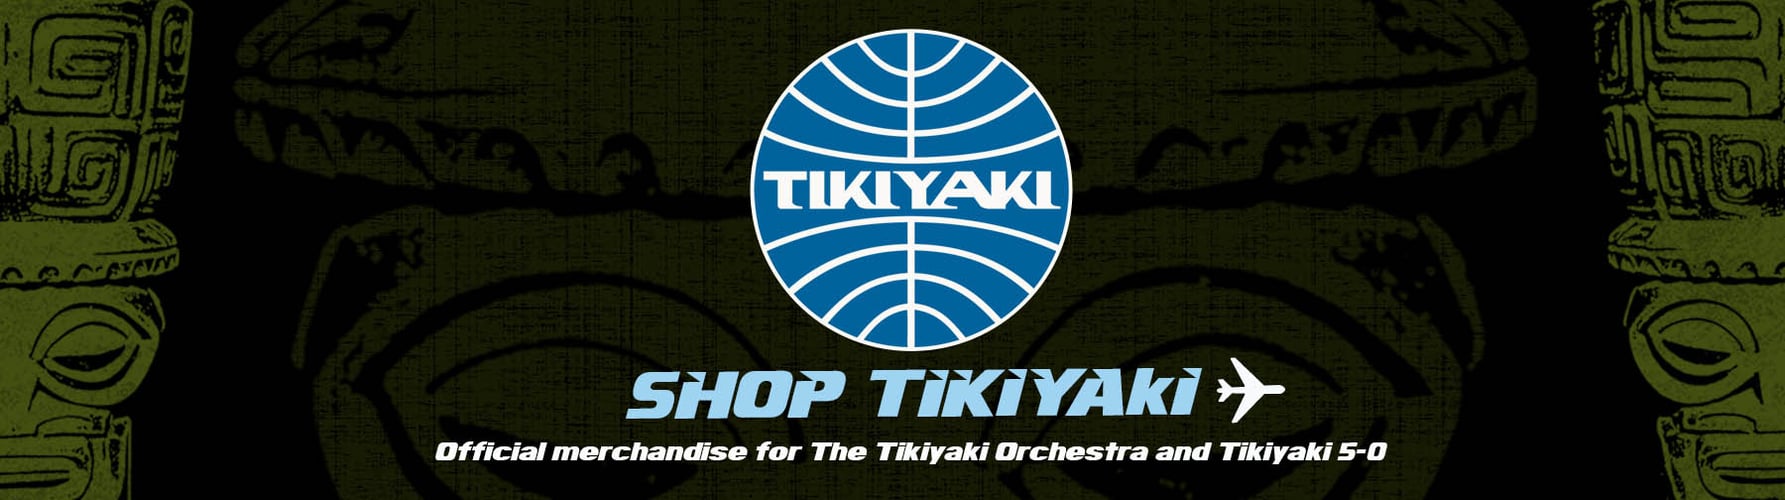 Shop Tikiyaki